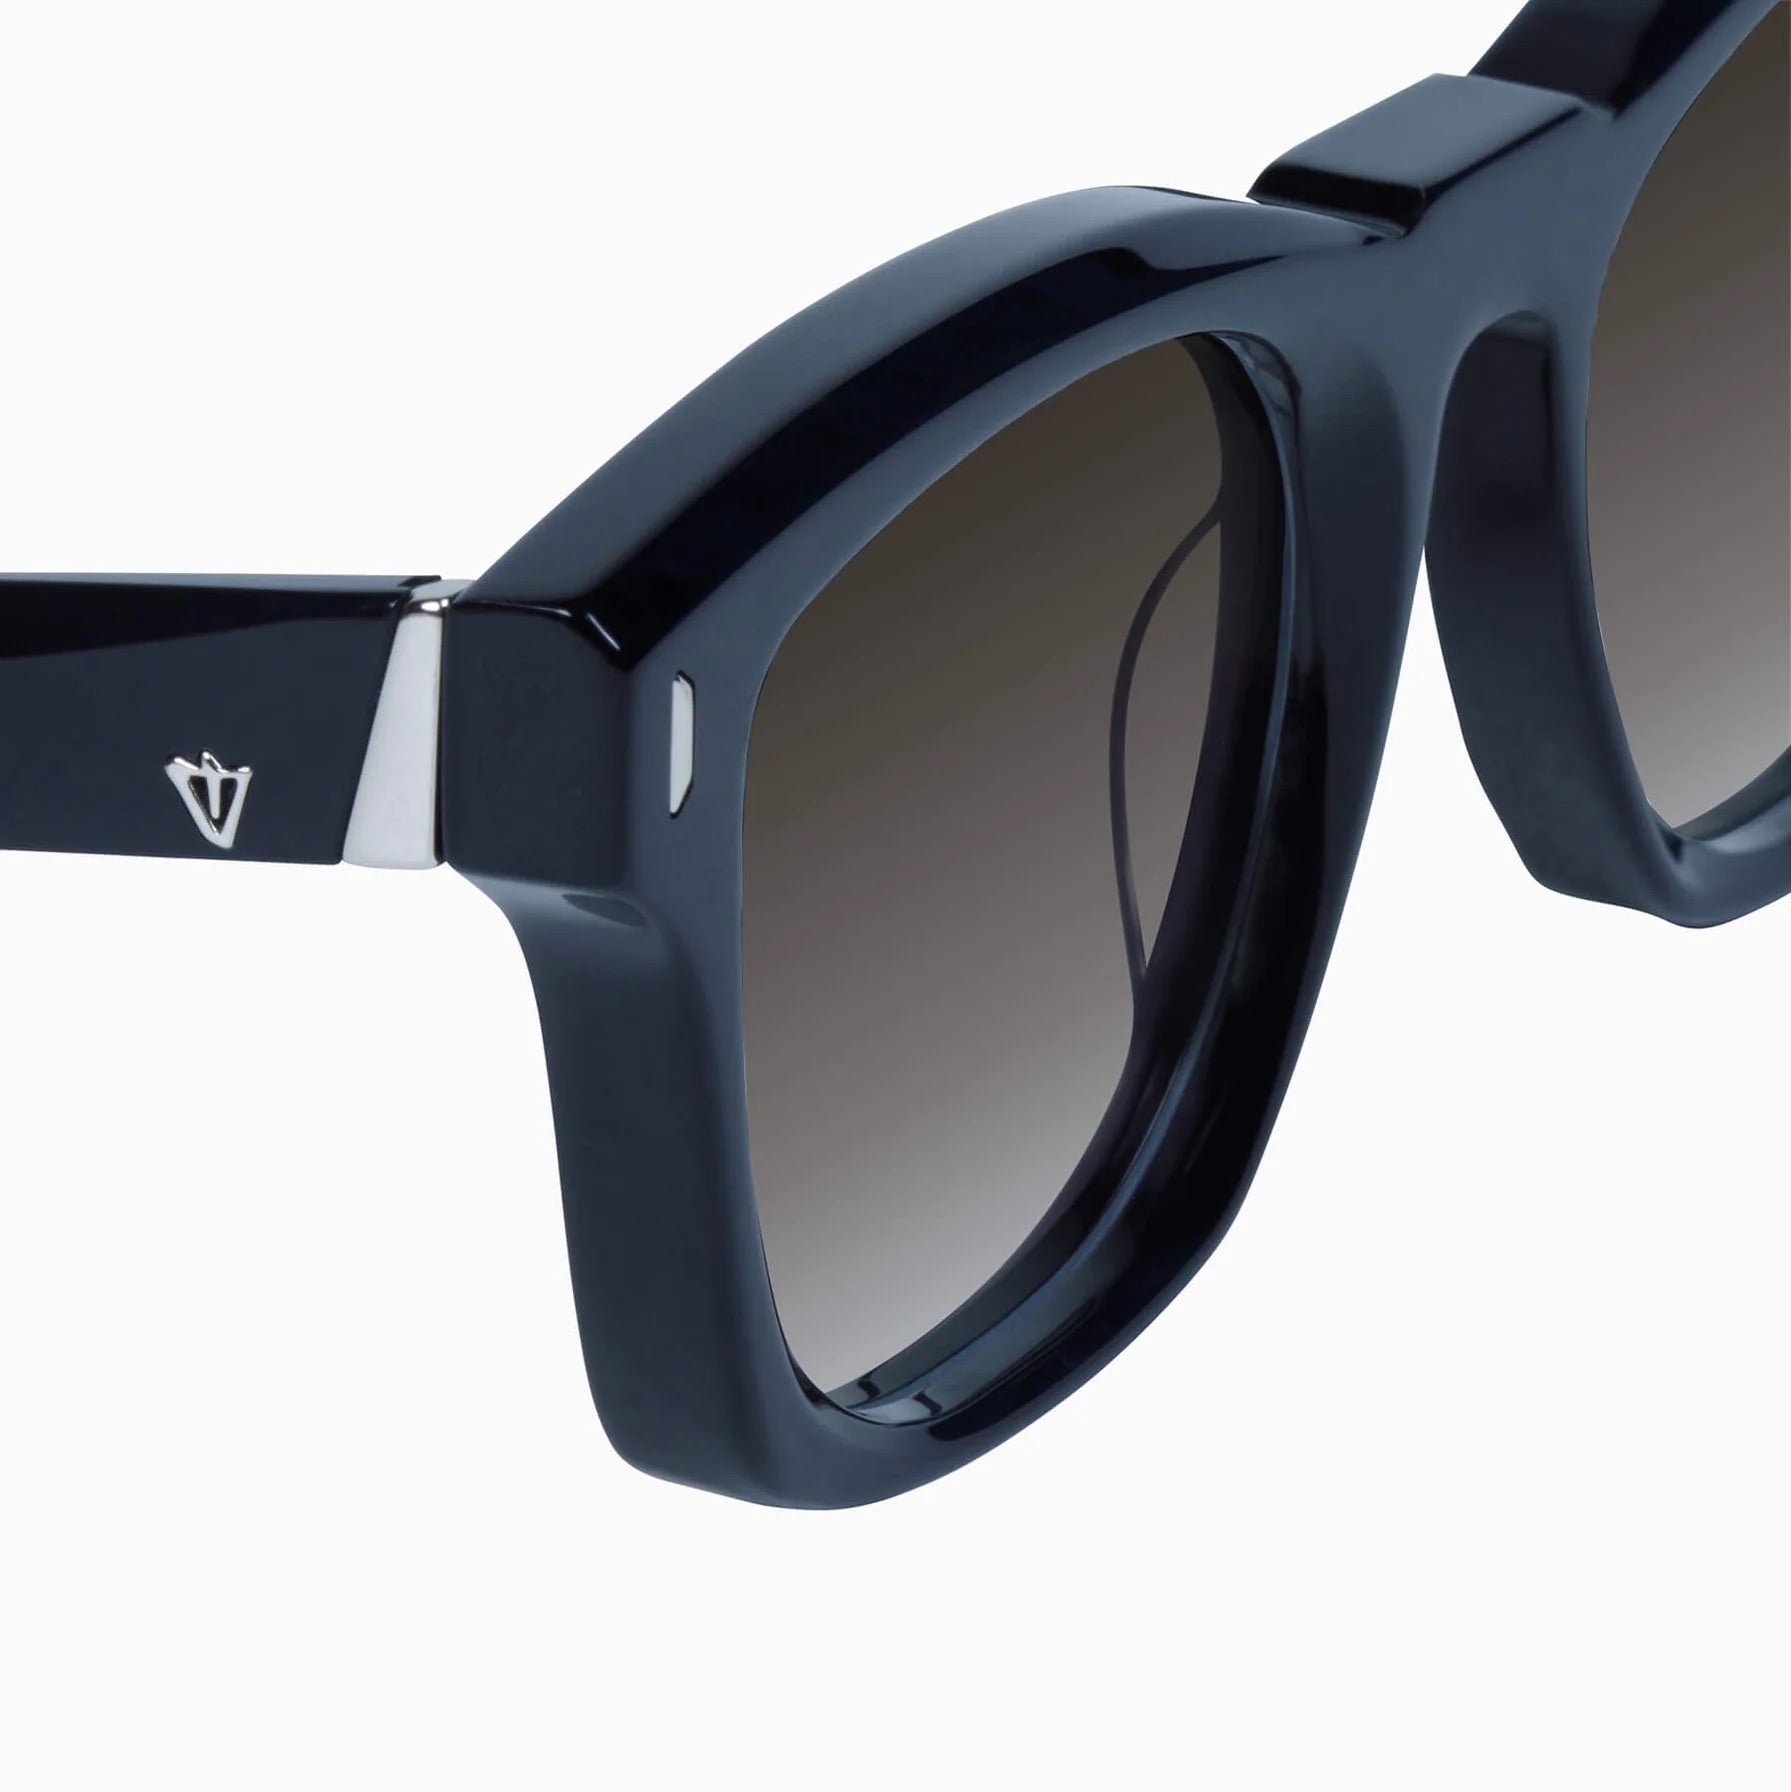 Solomon | Sunglasses - Gloss Black w. Silver Metal Trim / Brown Gradient Lens